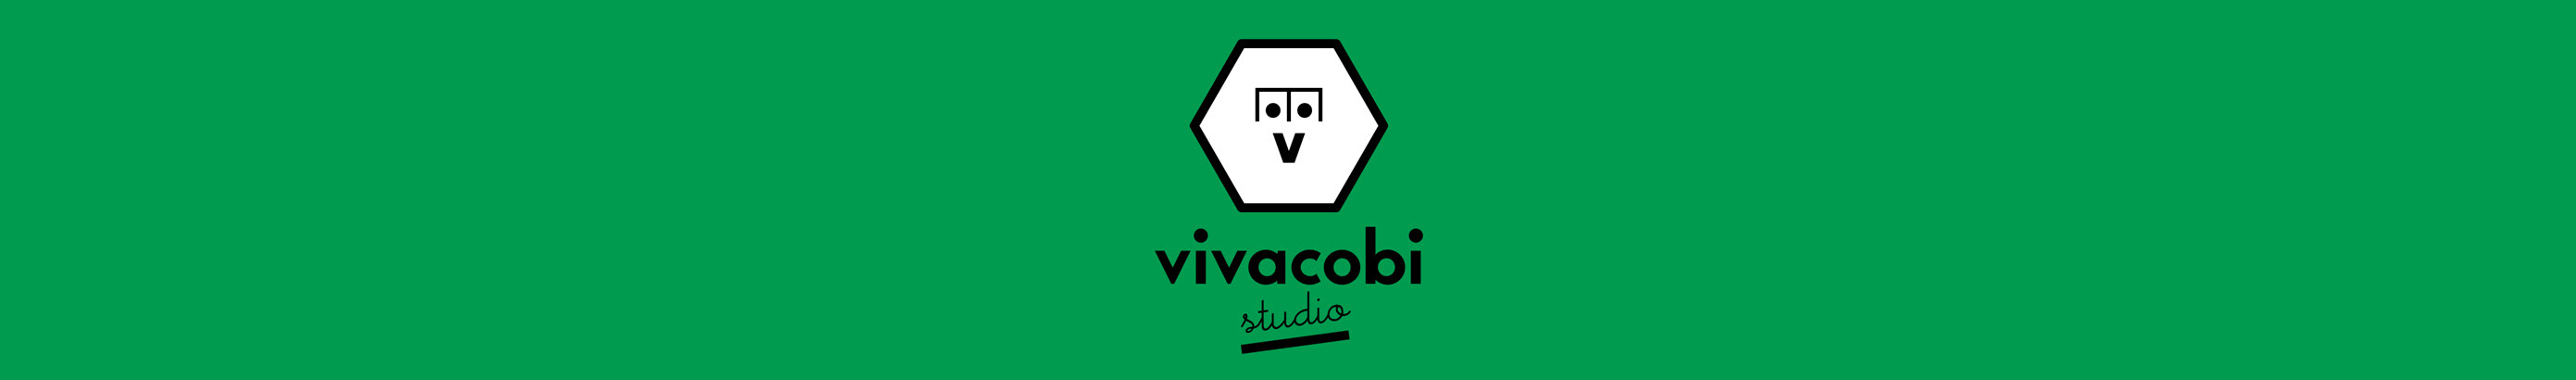 Vivacobi studio's profile banner